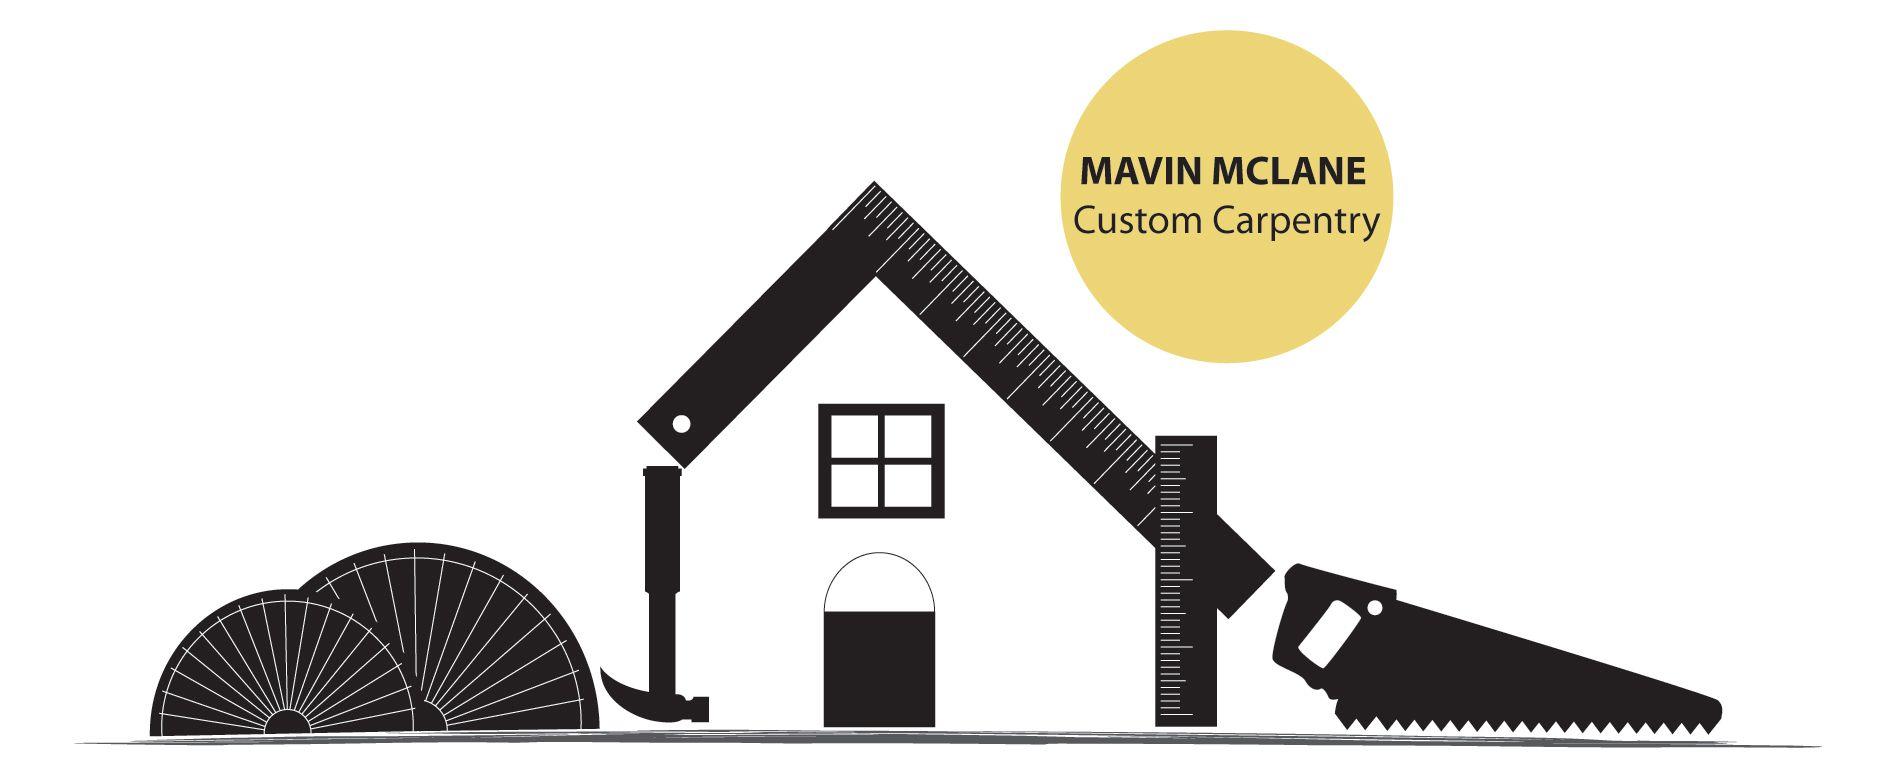 Carpentry Company Logo - Carpentry Logo Design for Mavin McLane Custom Carpentry by J F ...